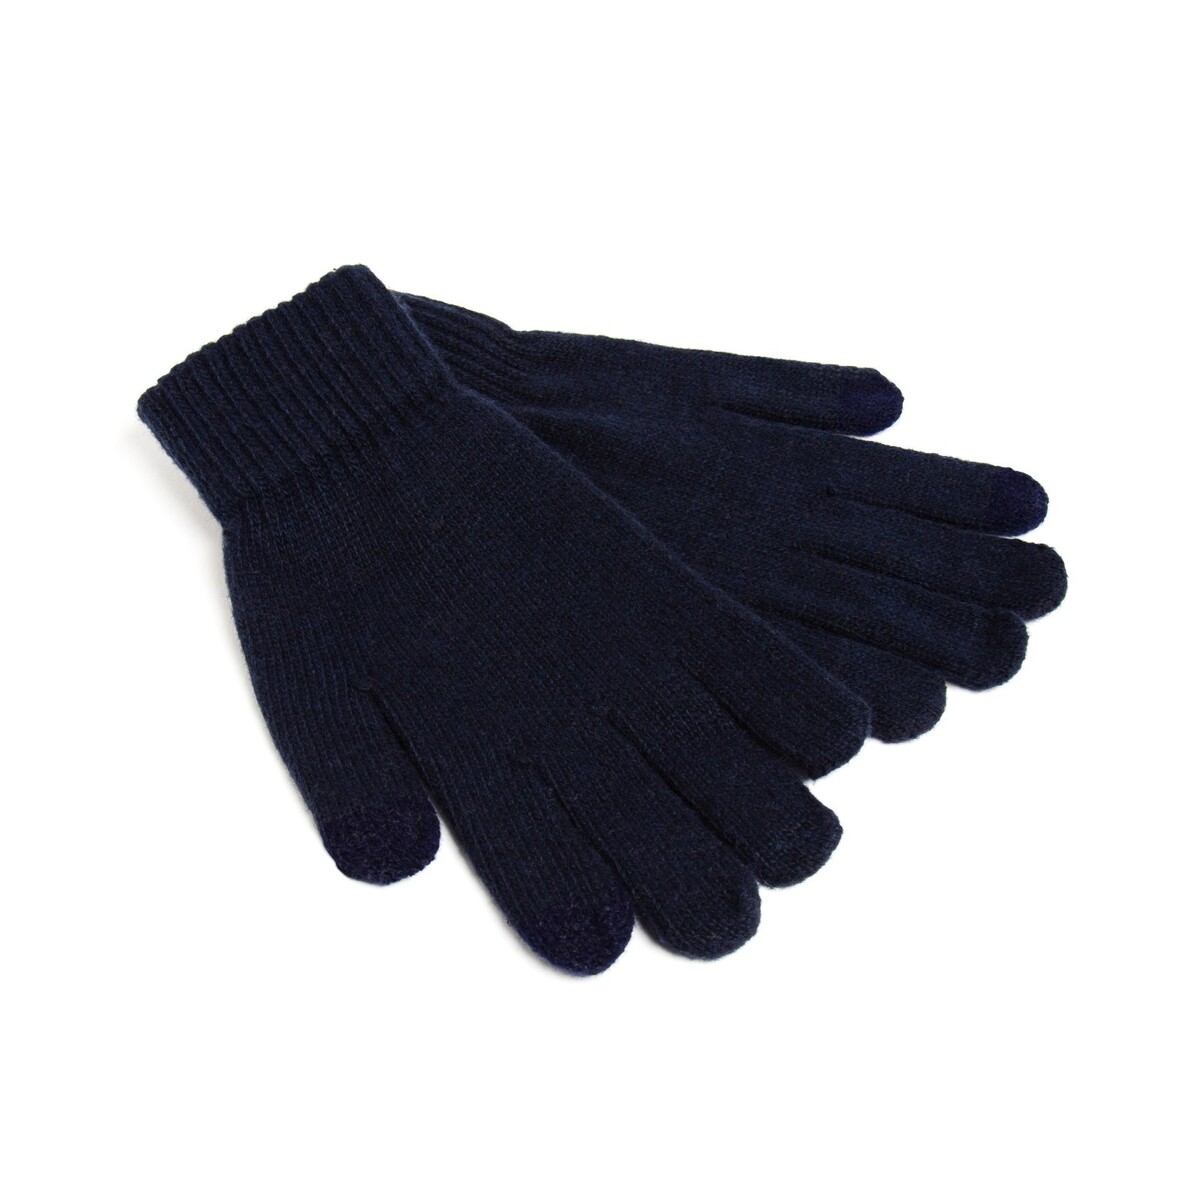 Перчатки мужские minaku однотонные, цв. темно-синий, р-р 9-10 (22-24 см) перчатки мужские minaku однотонные цв р р 9 10 22 24 см